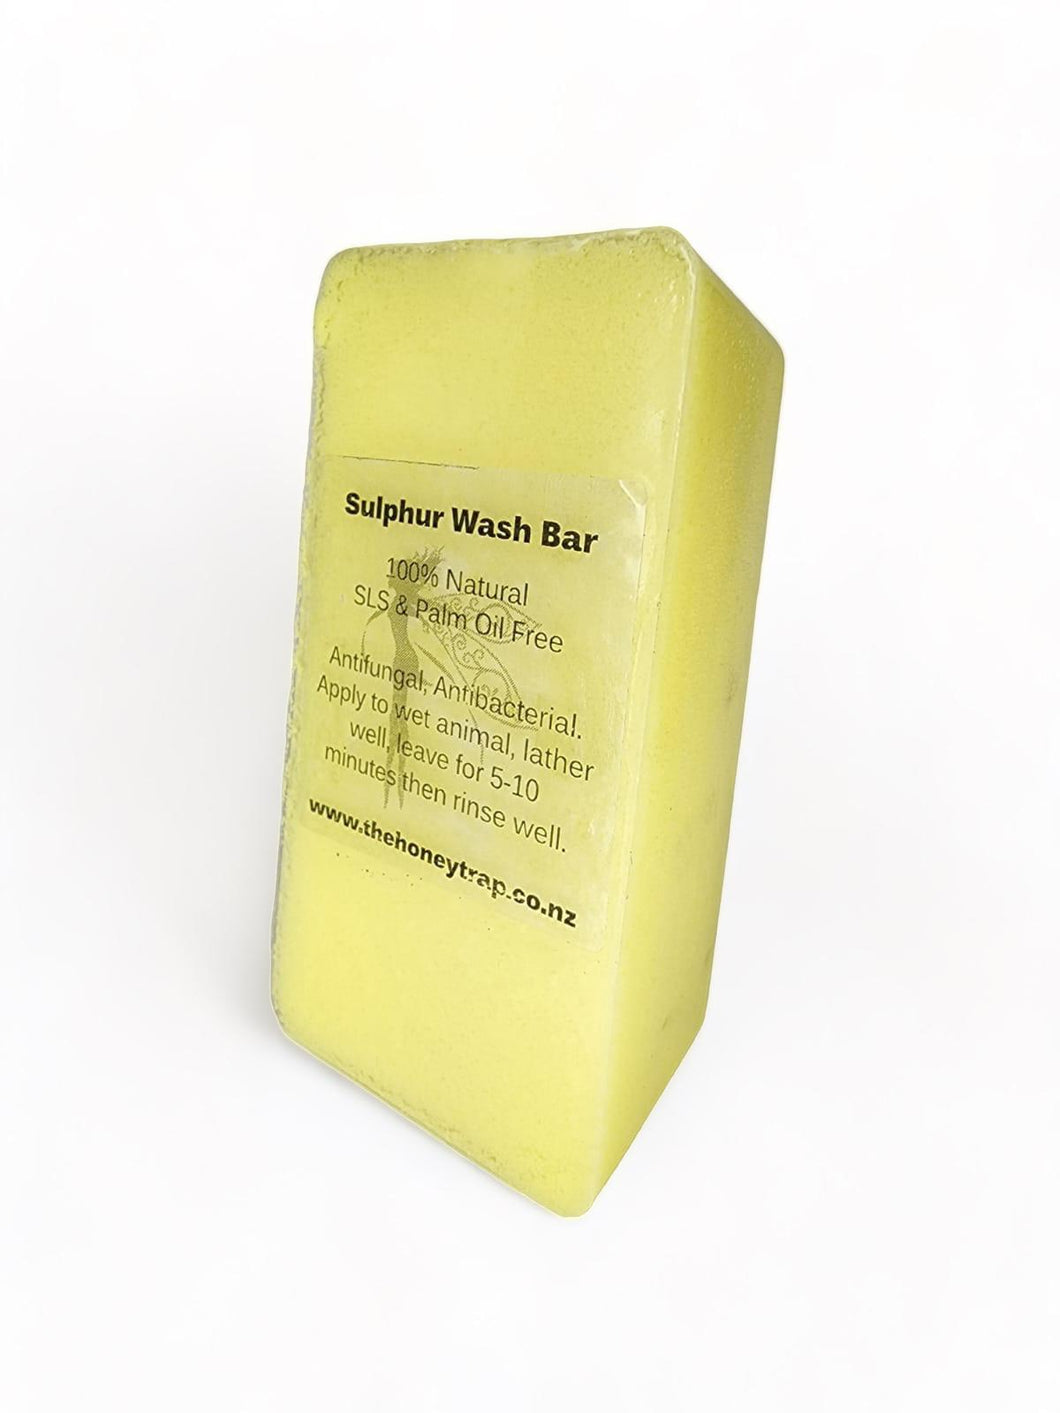 Sulphur washbar - antifungal, antibacterial